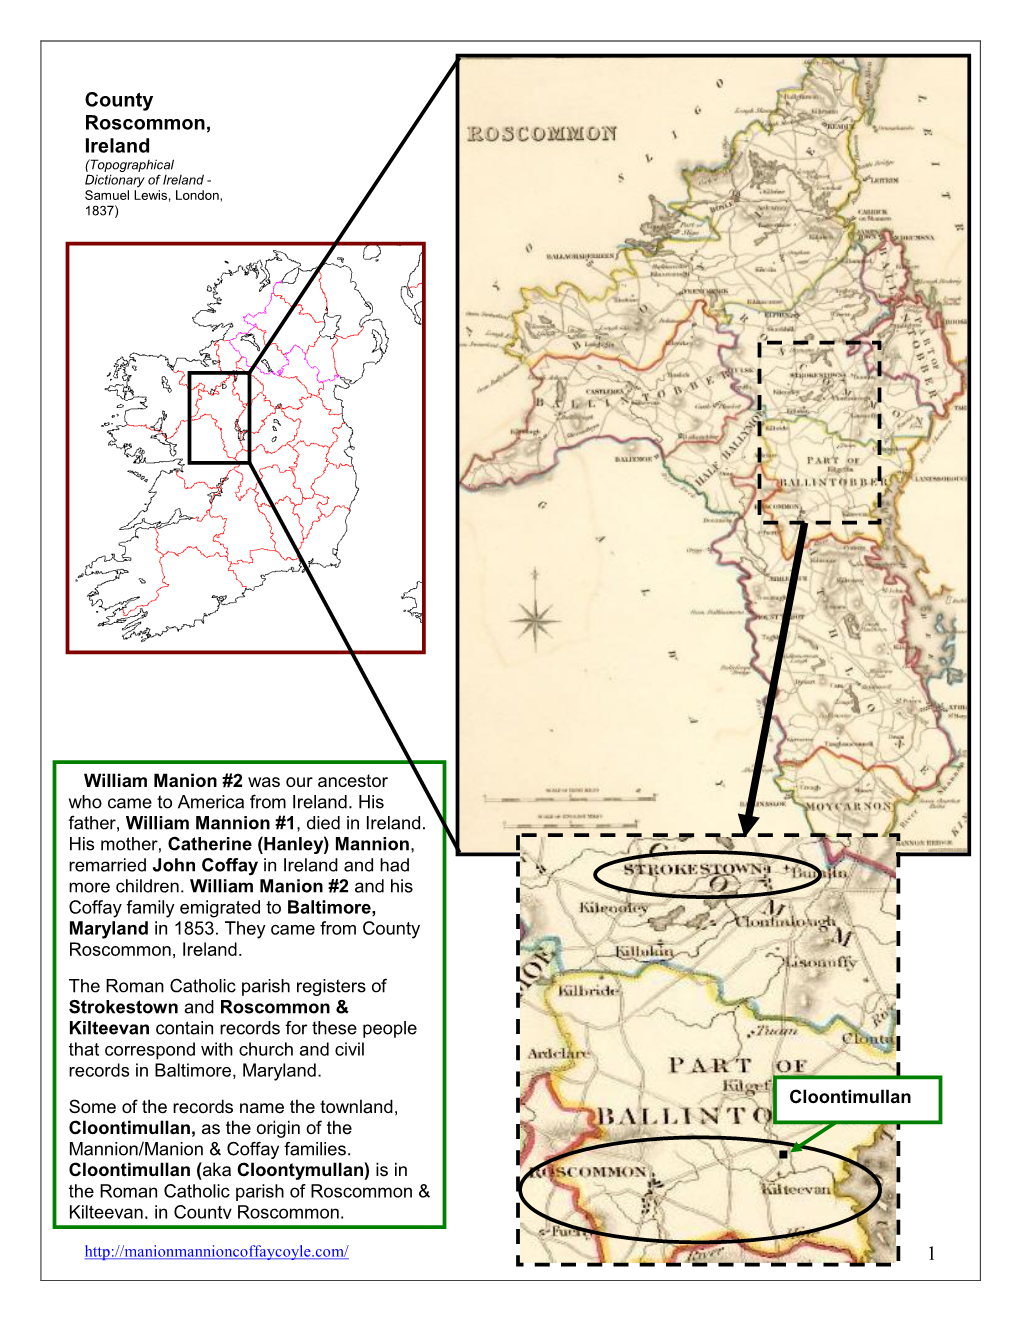 Origins in Roscommon County, Ireland